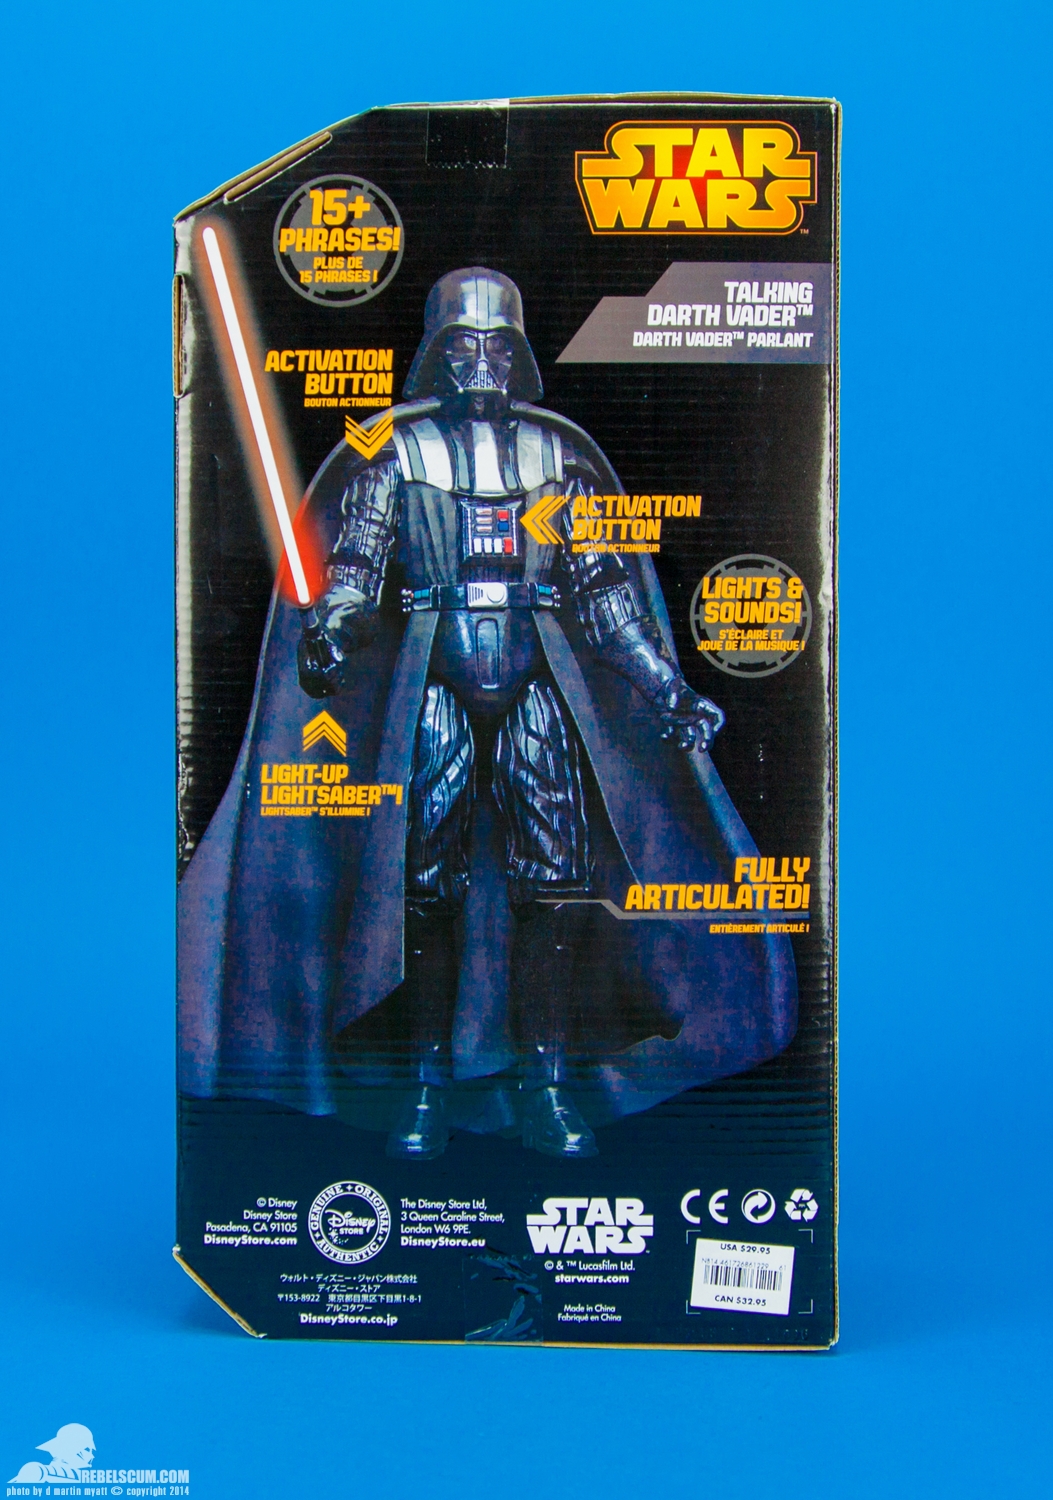 Darth-Vader-Talking-Disney-Store-Exclusive-Star-Wars-018.jpg